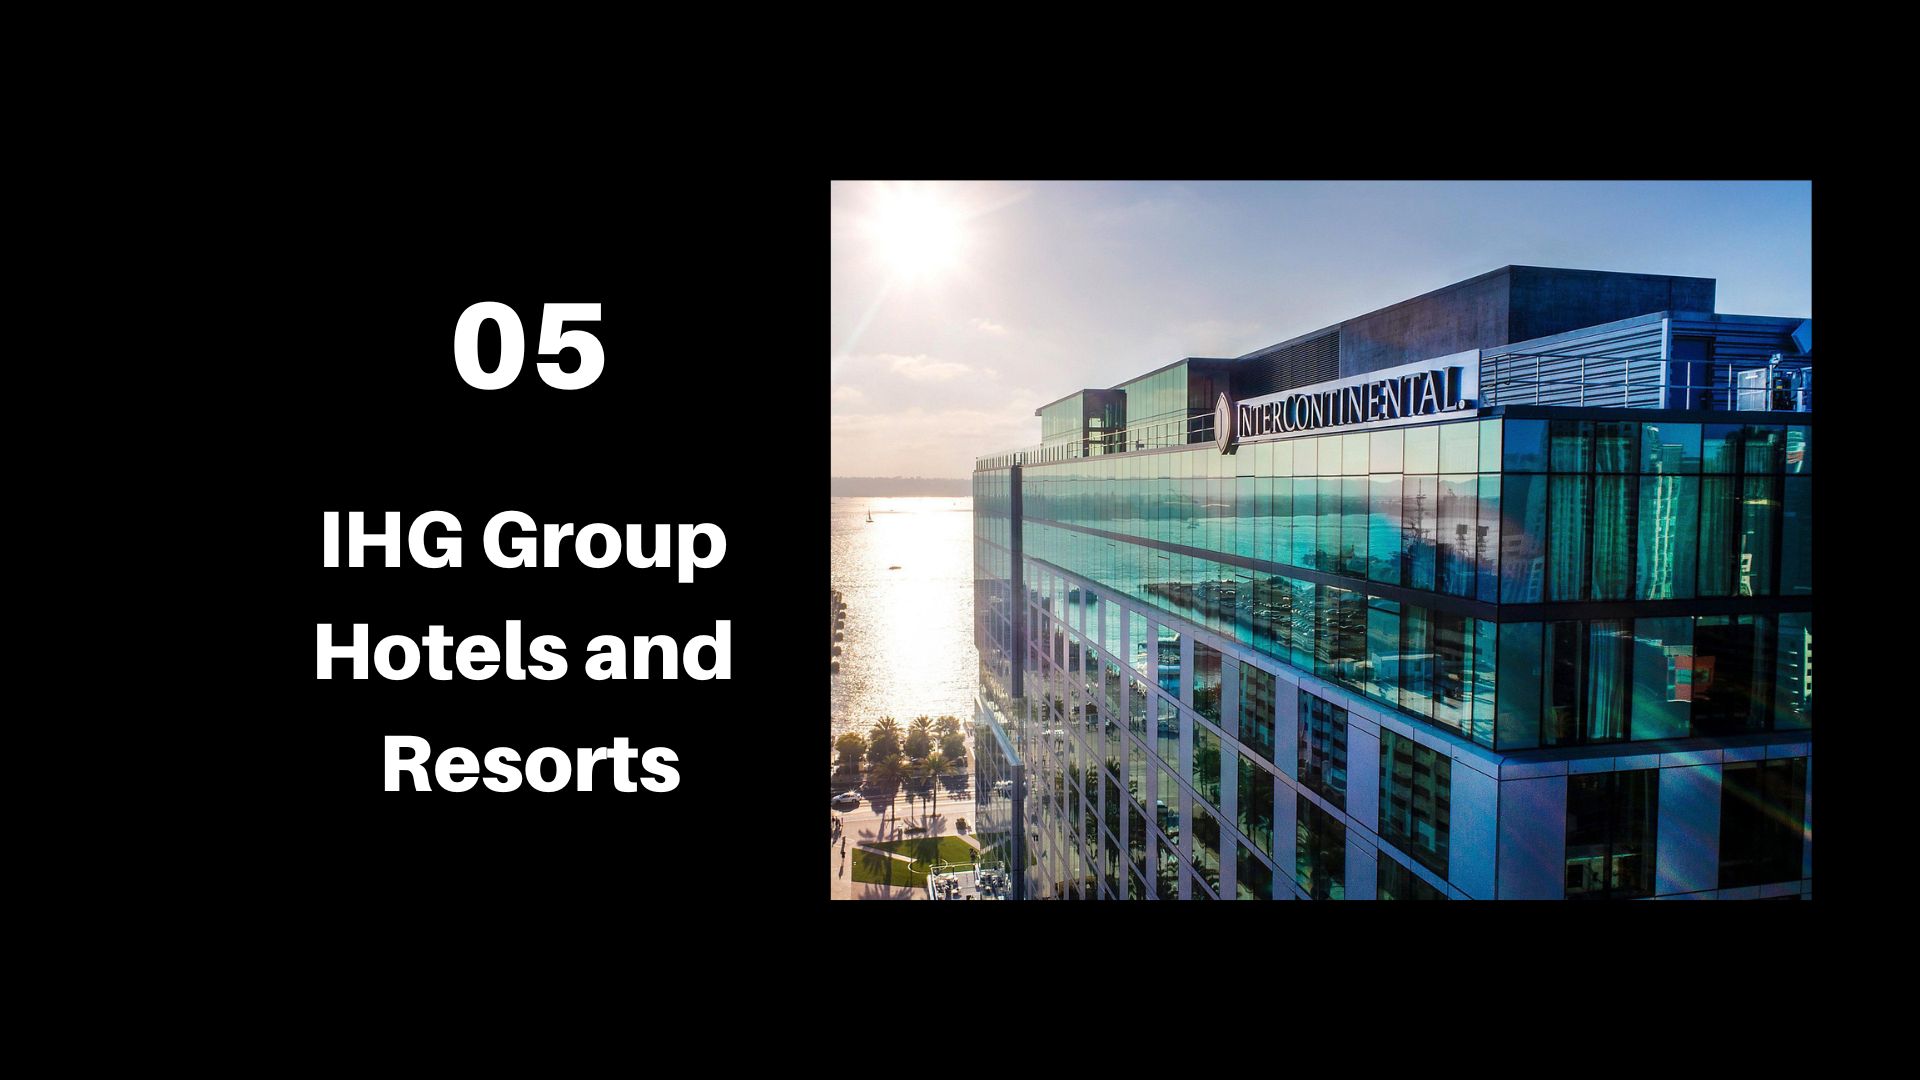 IHG Group Hotels and Resorts